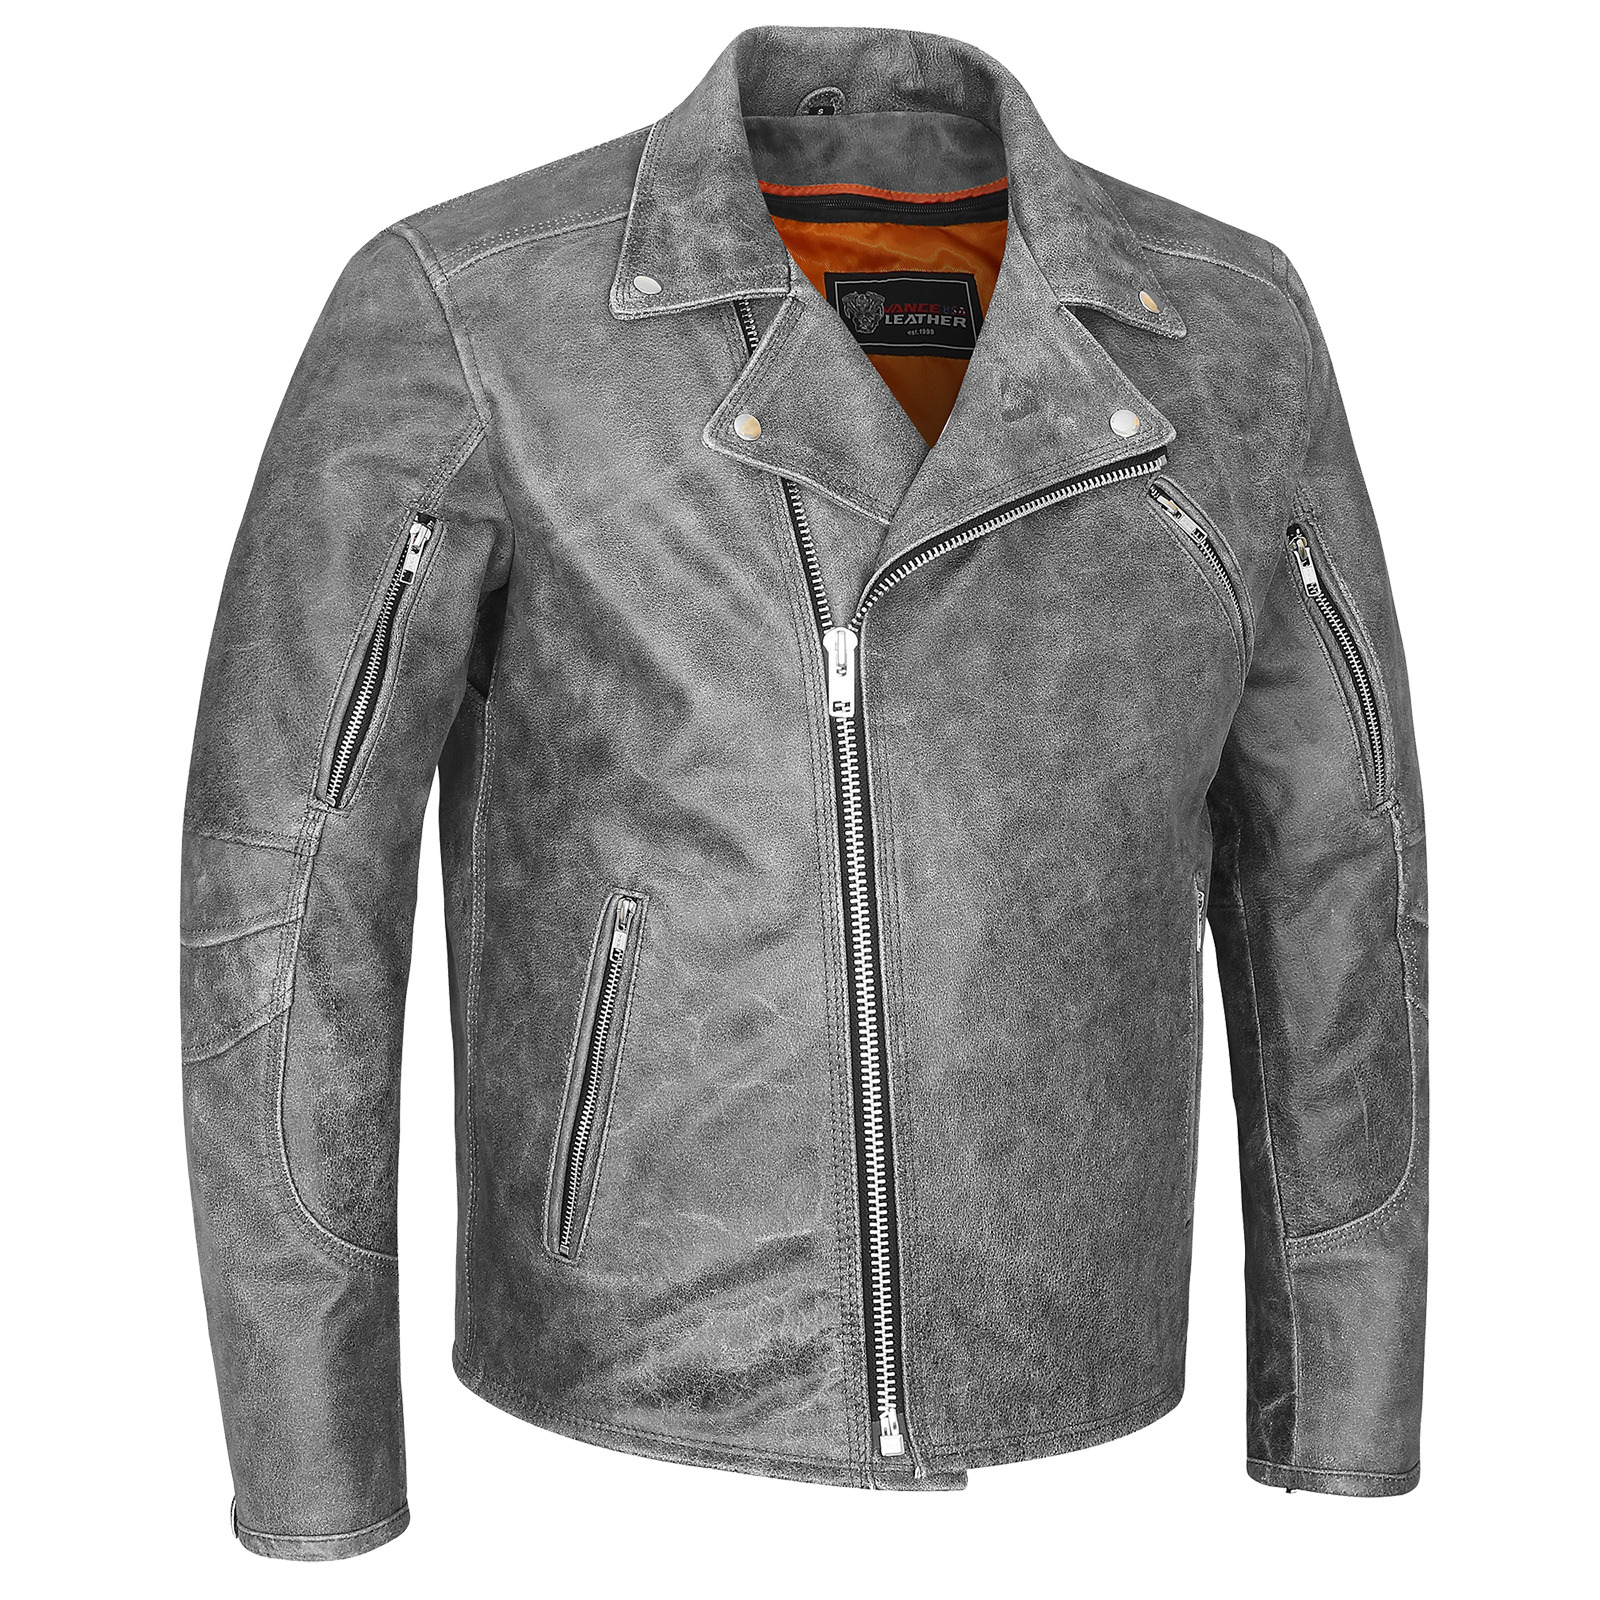 Men's Premium Leather Beltless Mcj w/ Dual Pockets & Z/o Liner